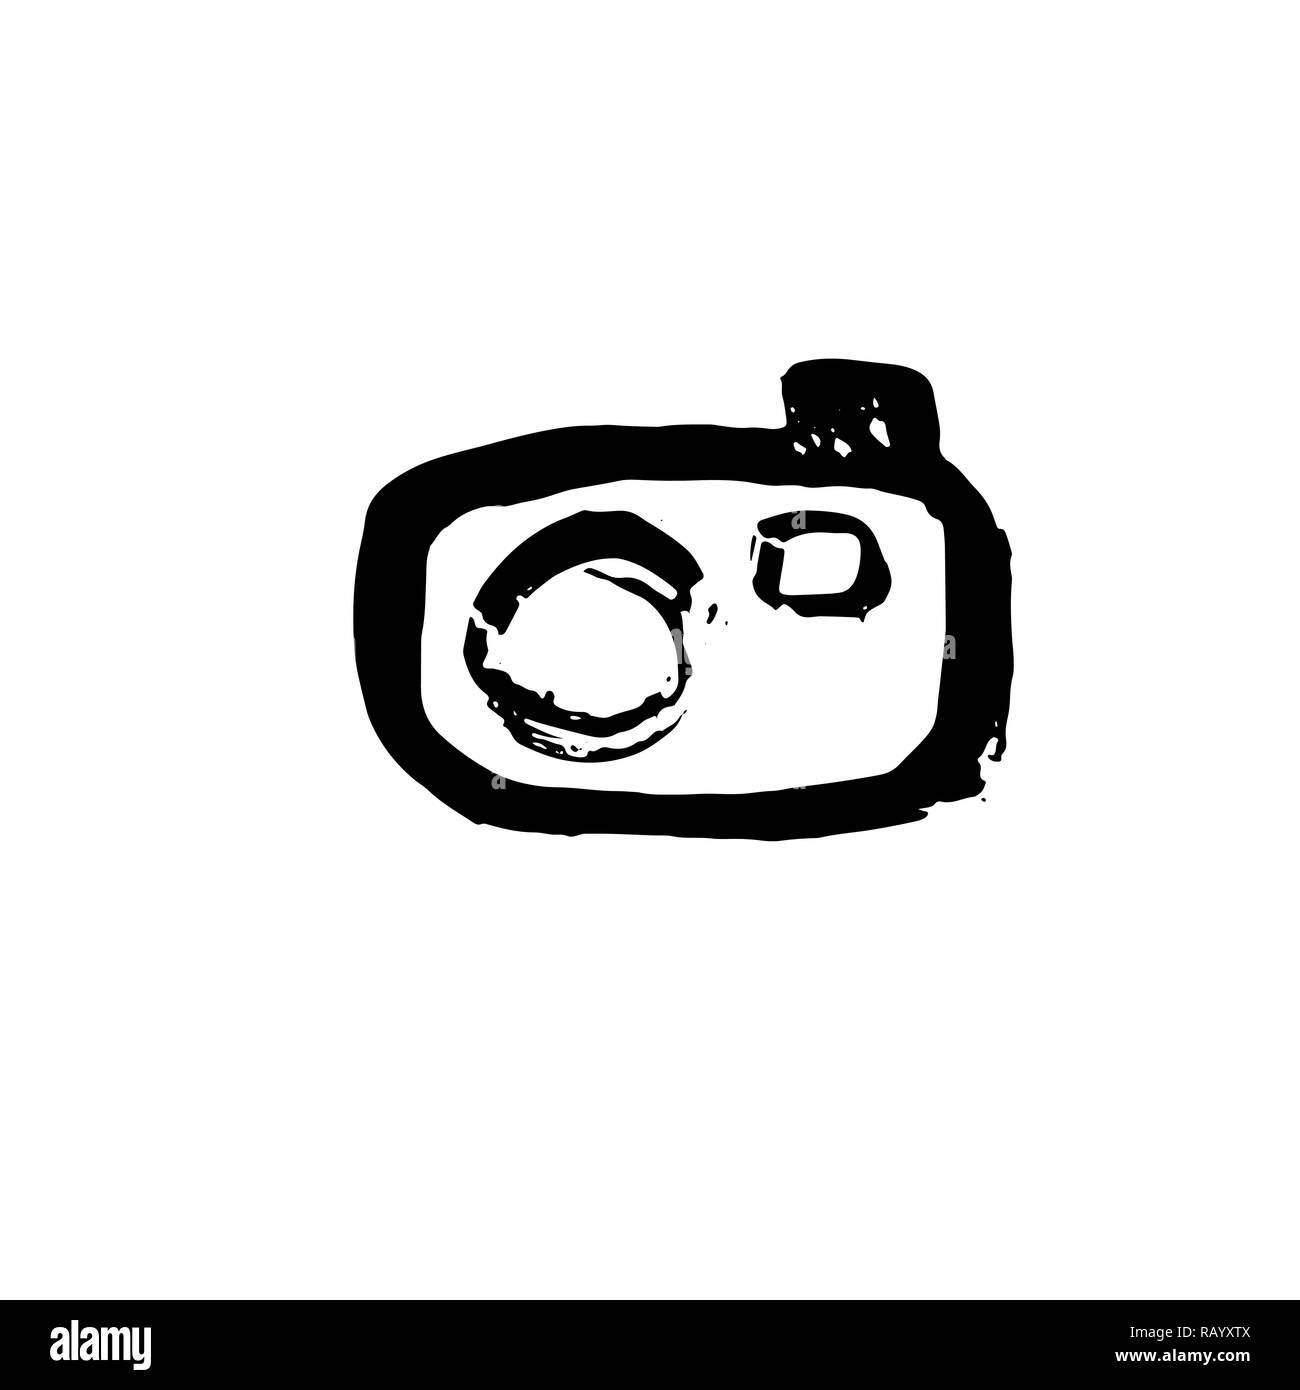 Camera grunge icon. Vector photocamera dry brush illustration. Stock Vector